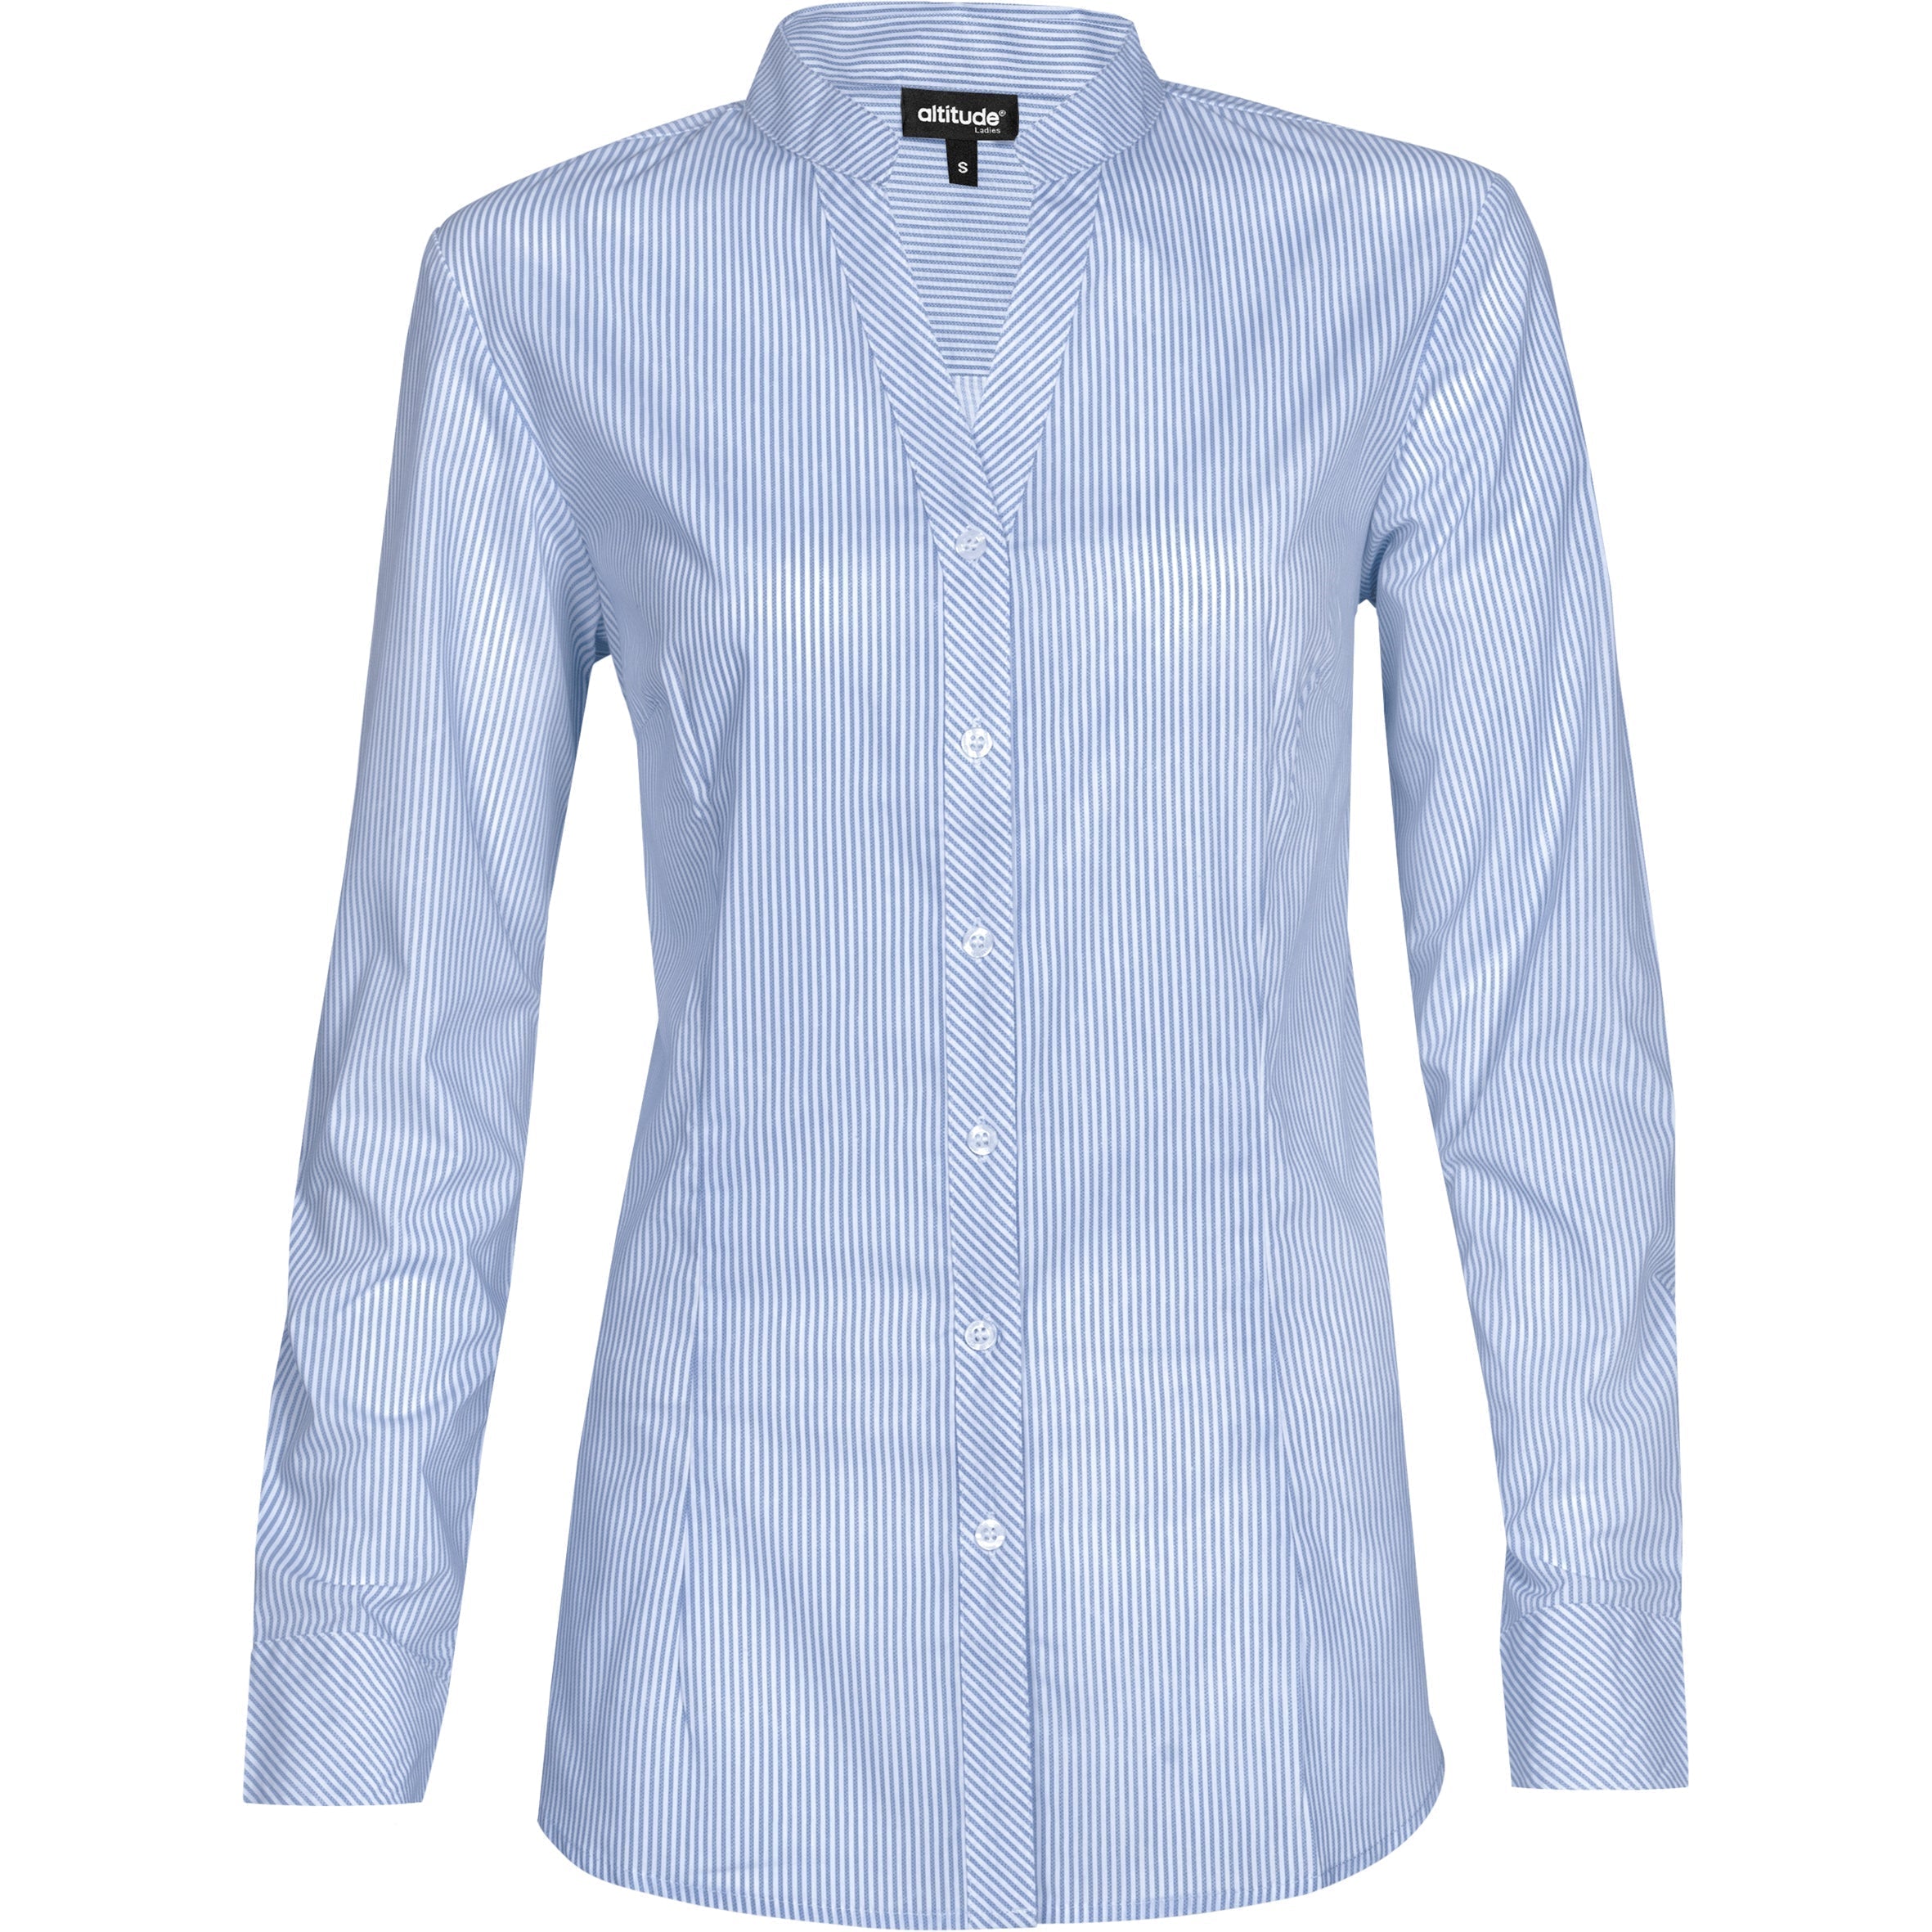 Ladies Long Sleeve Birmingham Shirt - Navy Only-